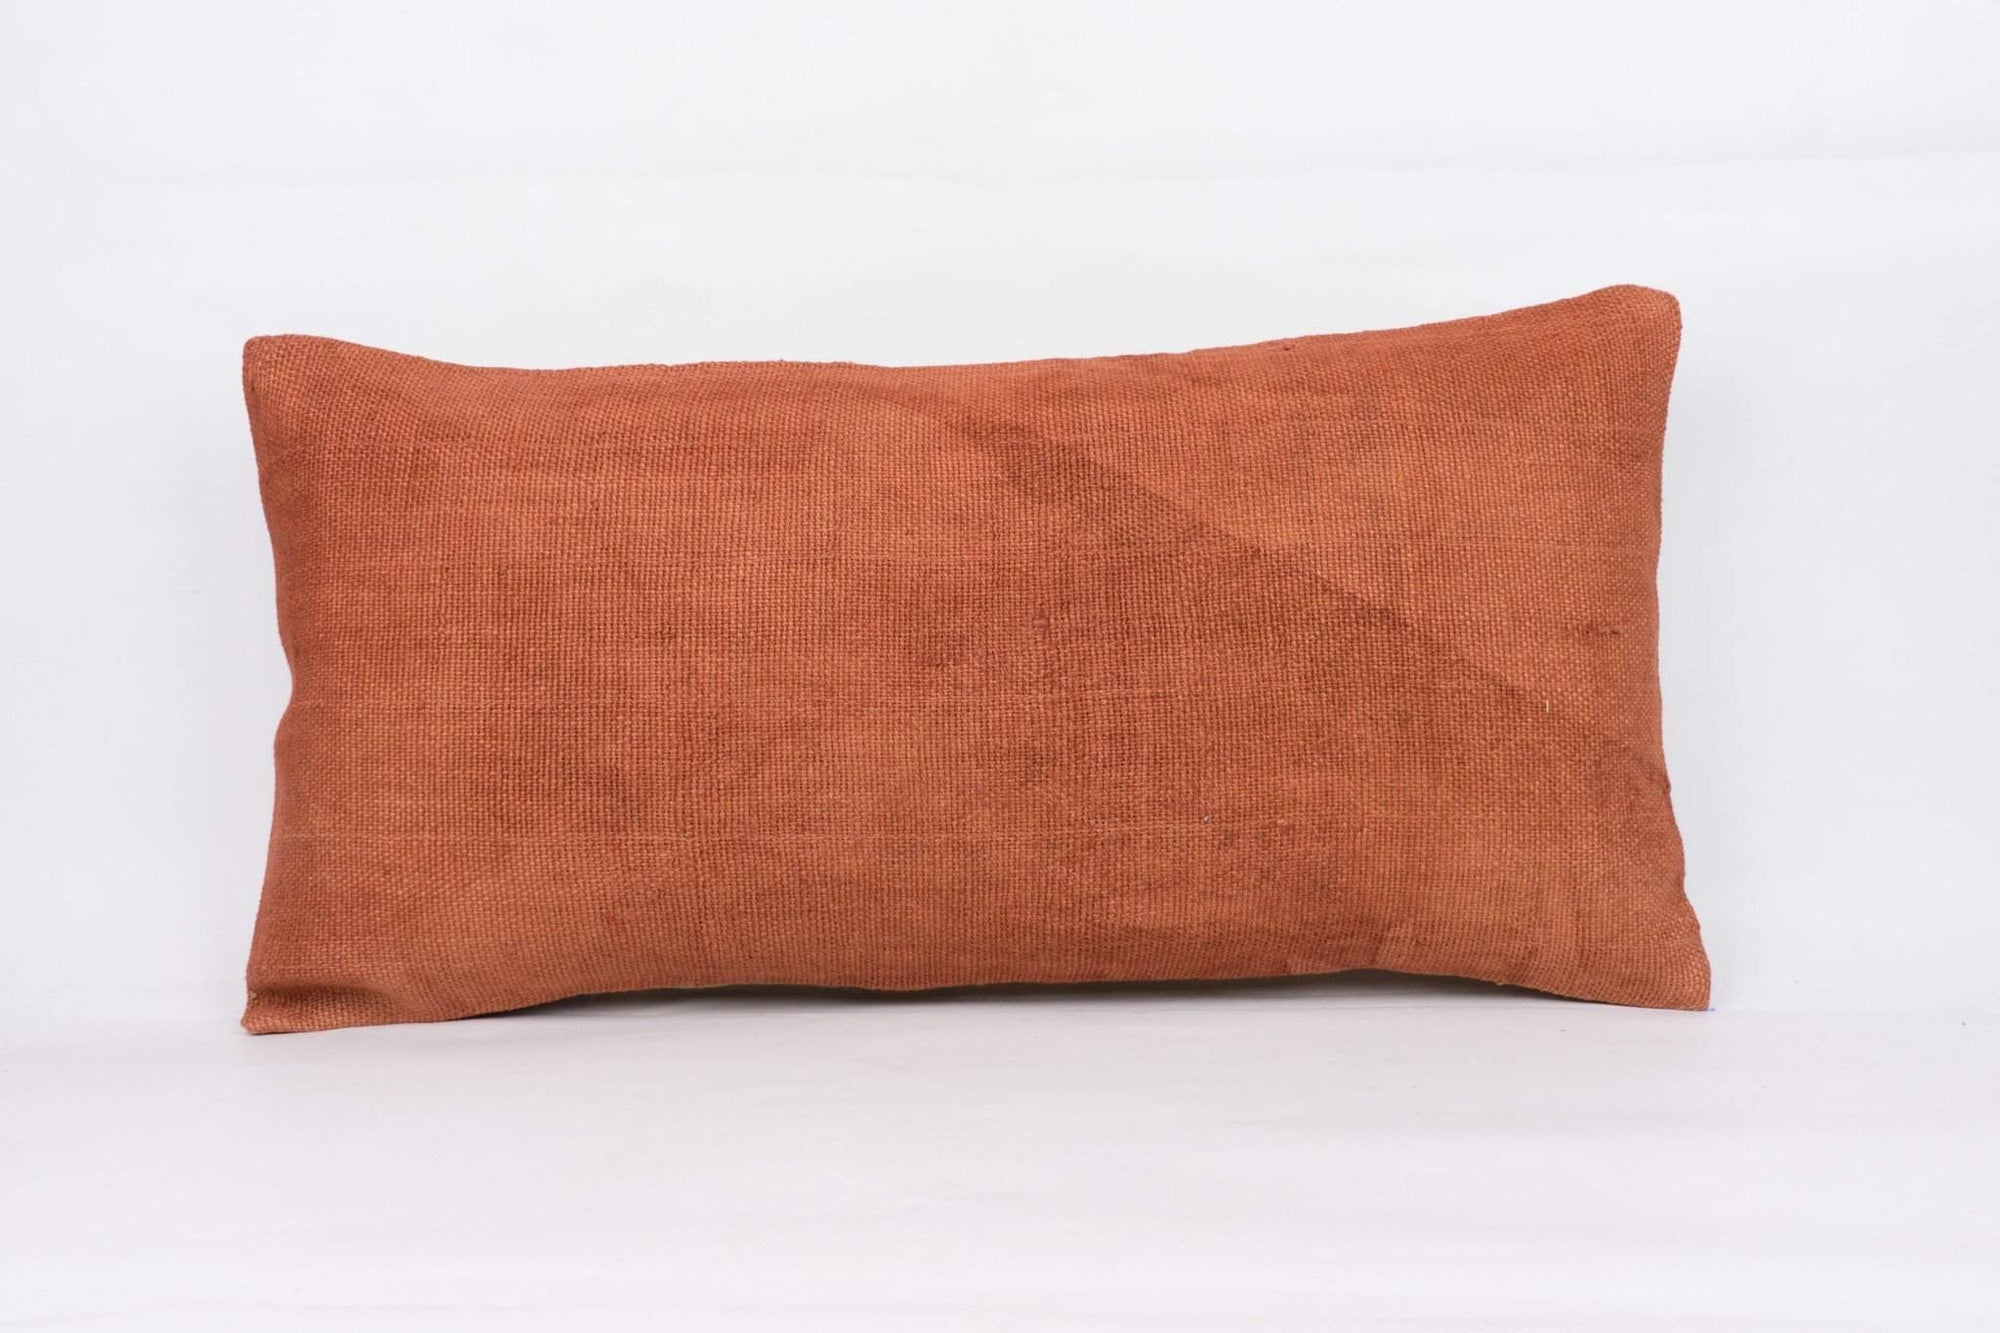 Plain Brown Kilim Pillow Cover 12x24 4196 - kilimpillowstore
 - 1